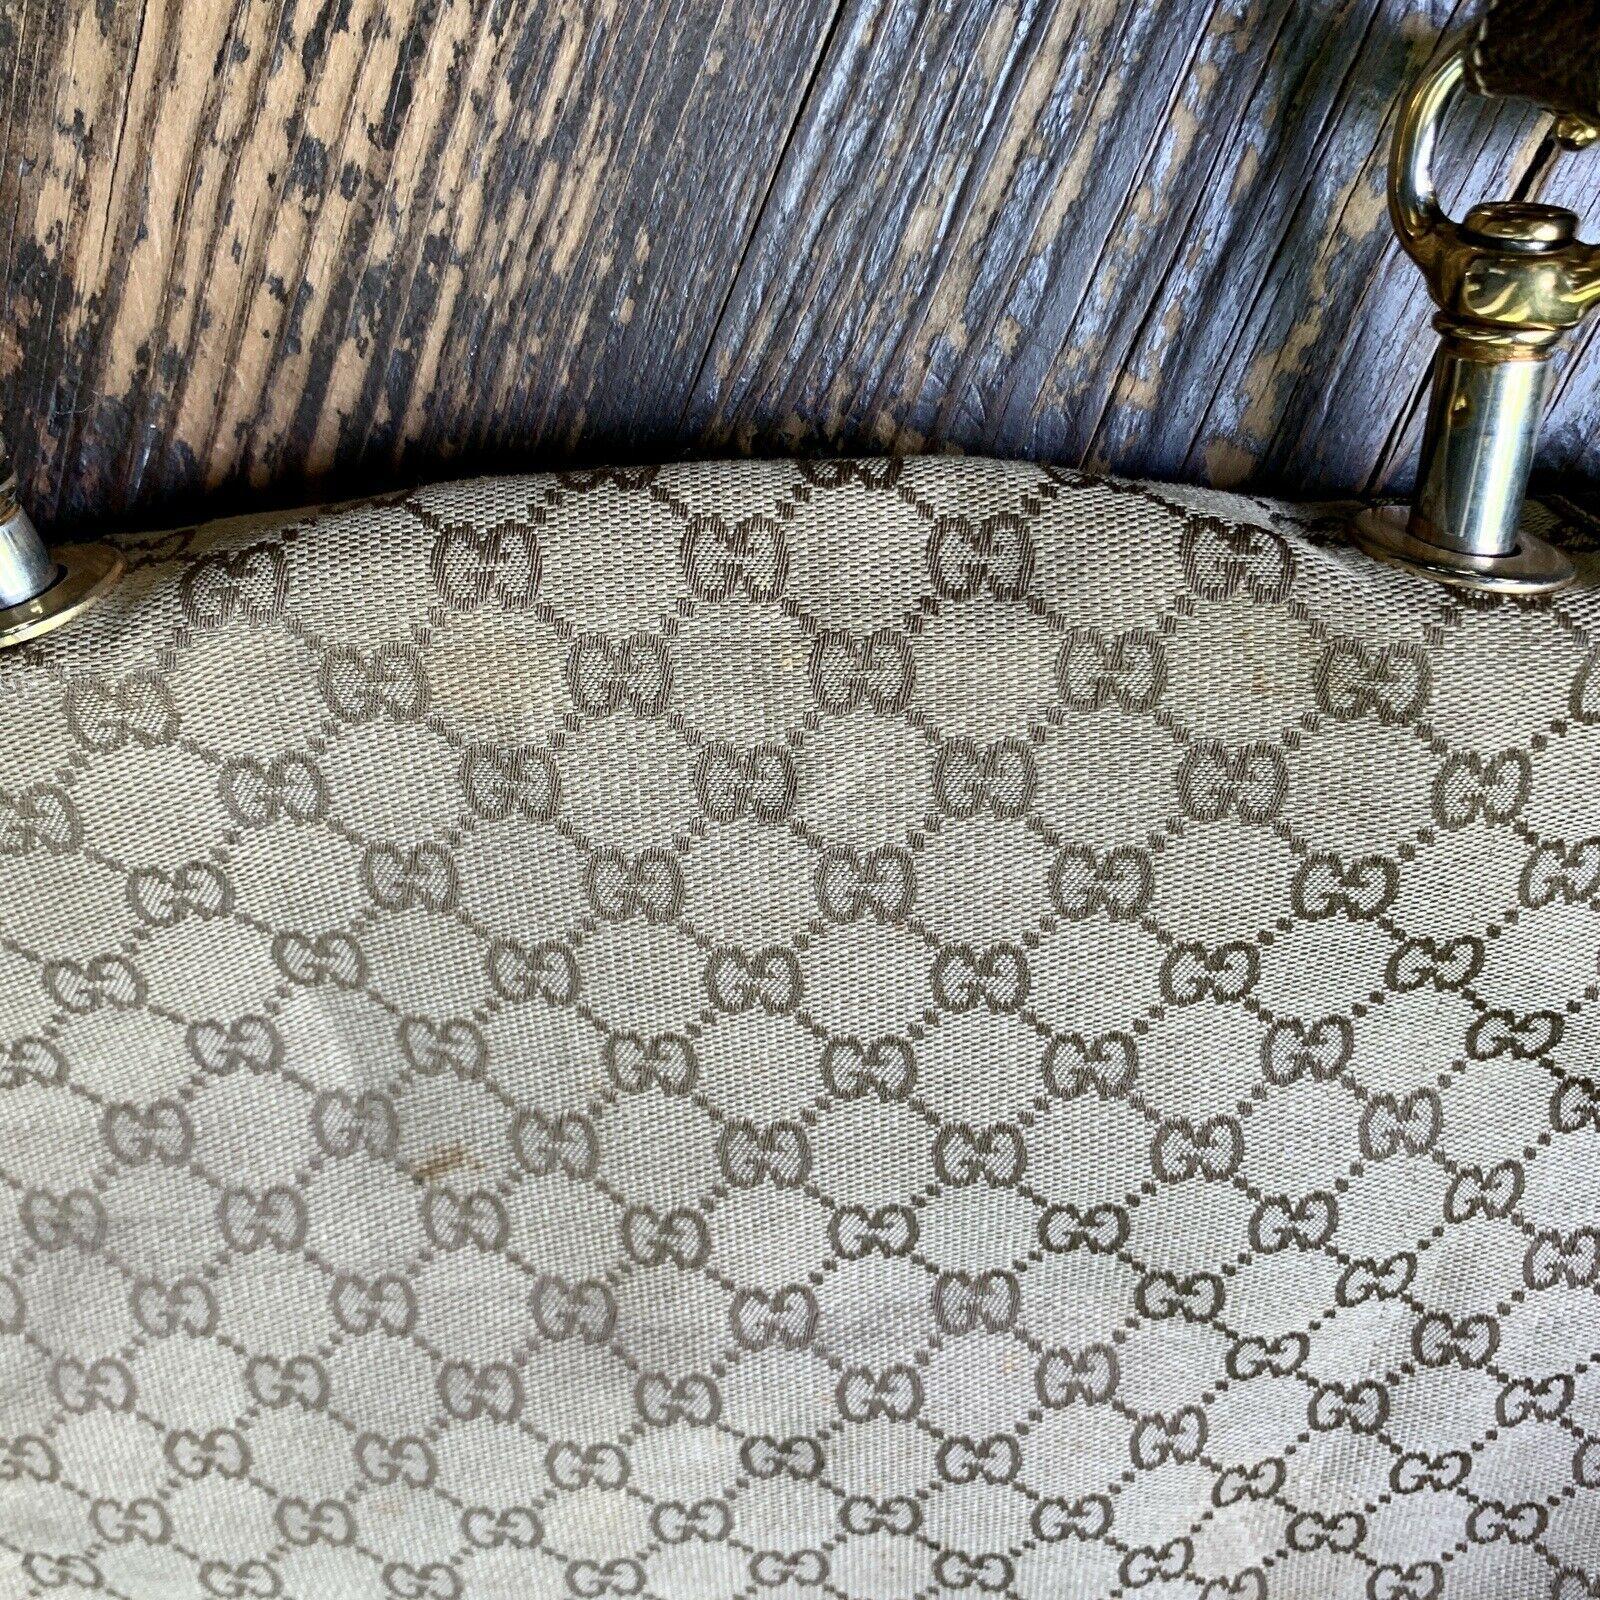 GUCCI Authentic RARE Leather GG Logo VINTAGE 1970s Handbag Purse Crossbody ITALY For Sale 1